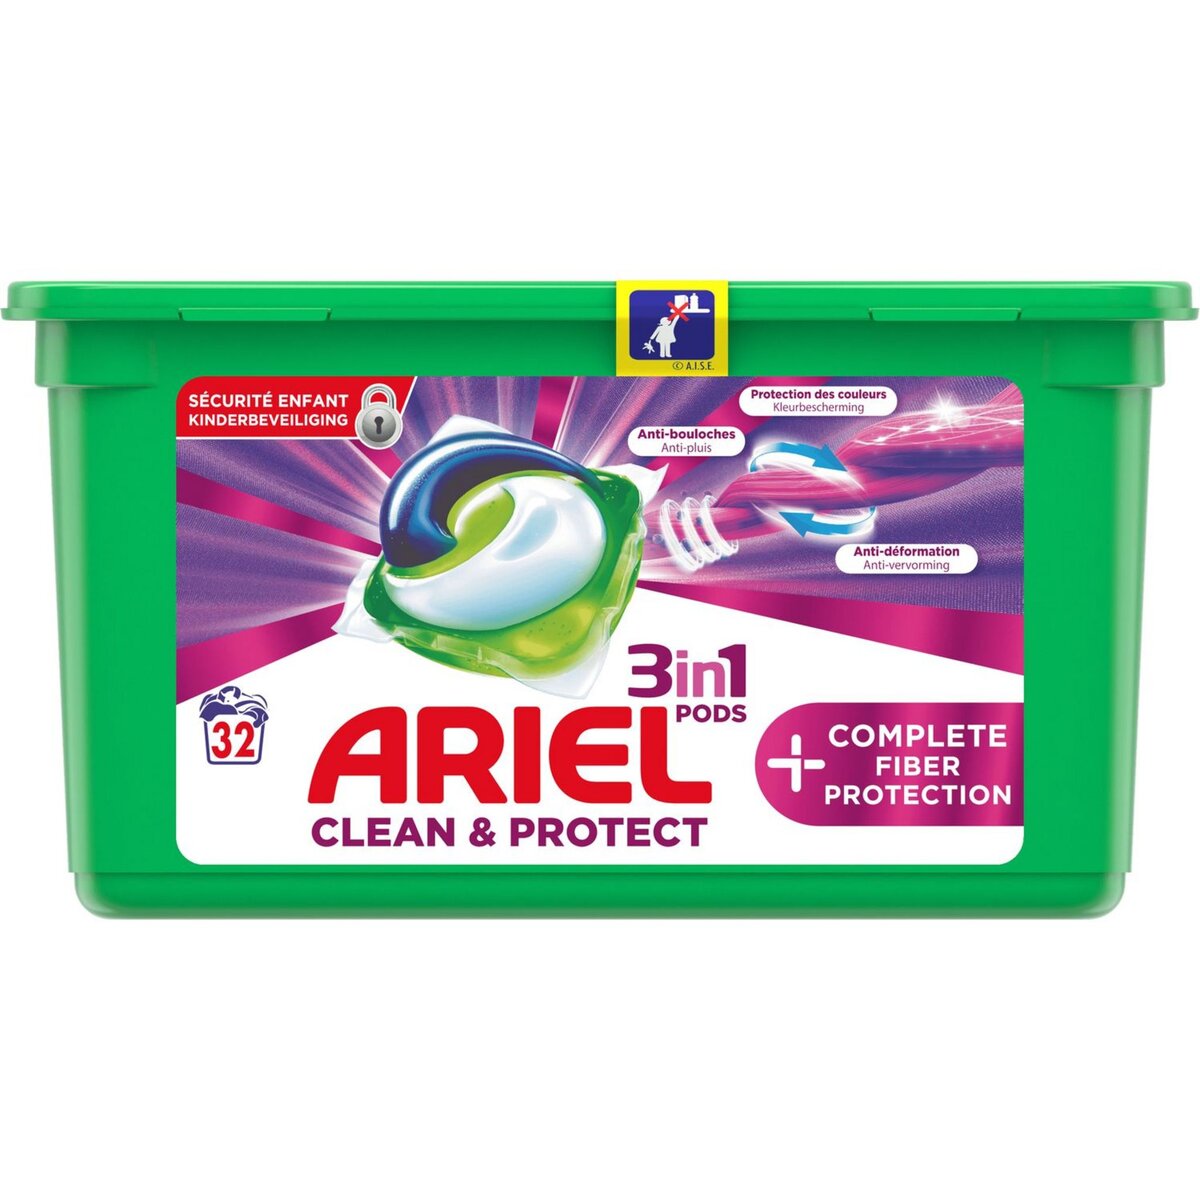 ARIEL Ariel Pods Lessive capsules clean & protect 32 lavages 32 lavages 32 capsules